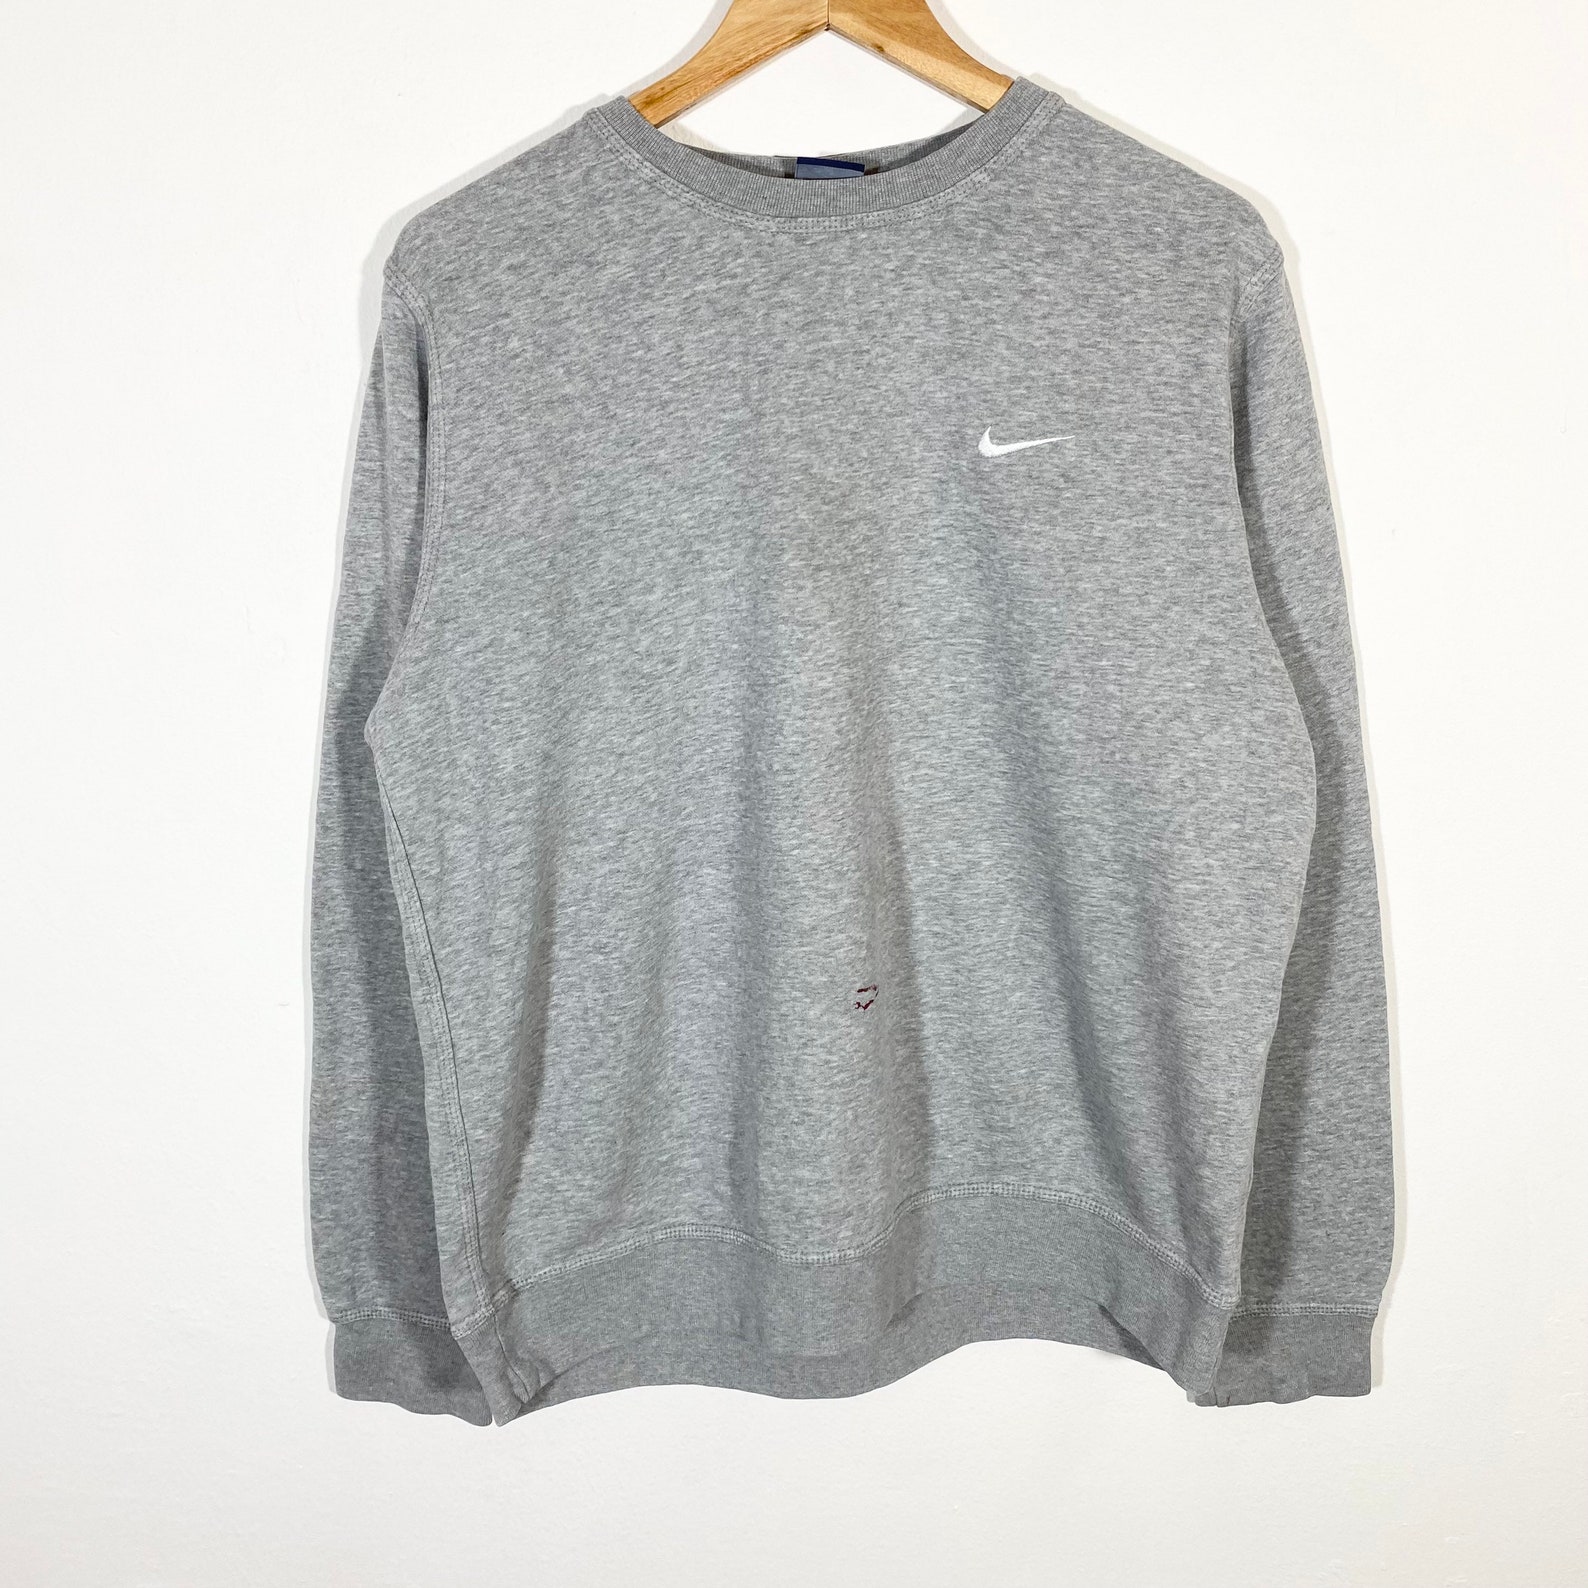 Nike Sweatshirt / Nike Crewneck / Nike Sweater / Vintage | Etsy